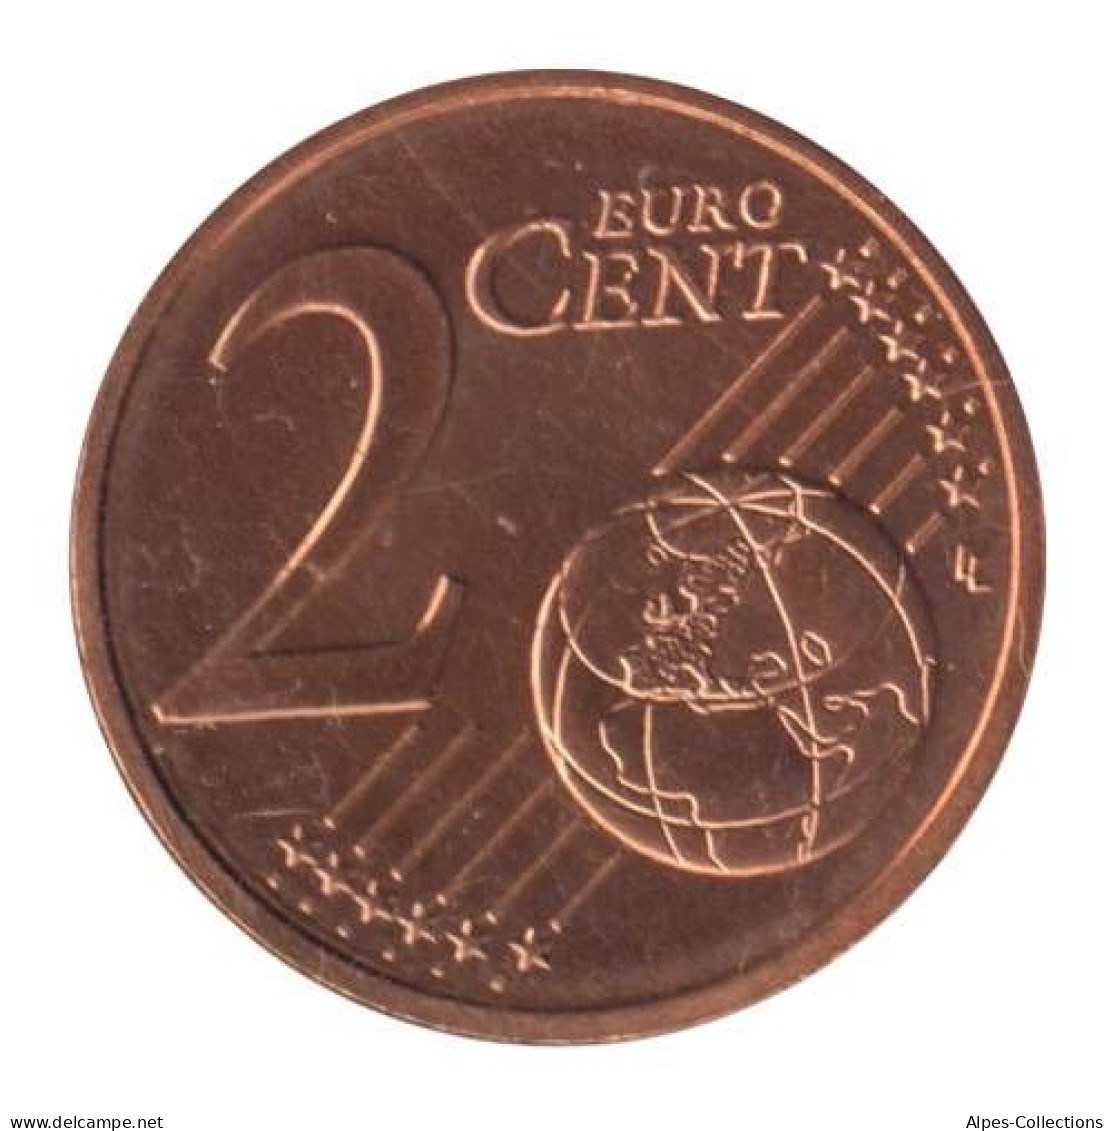 FR00209.2 - FRANCE - 2 Cents - 2009 - BU - France